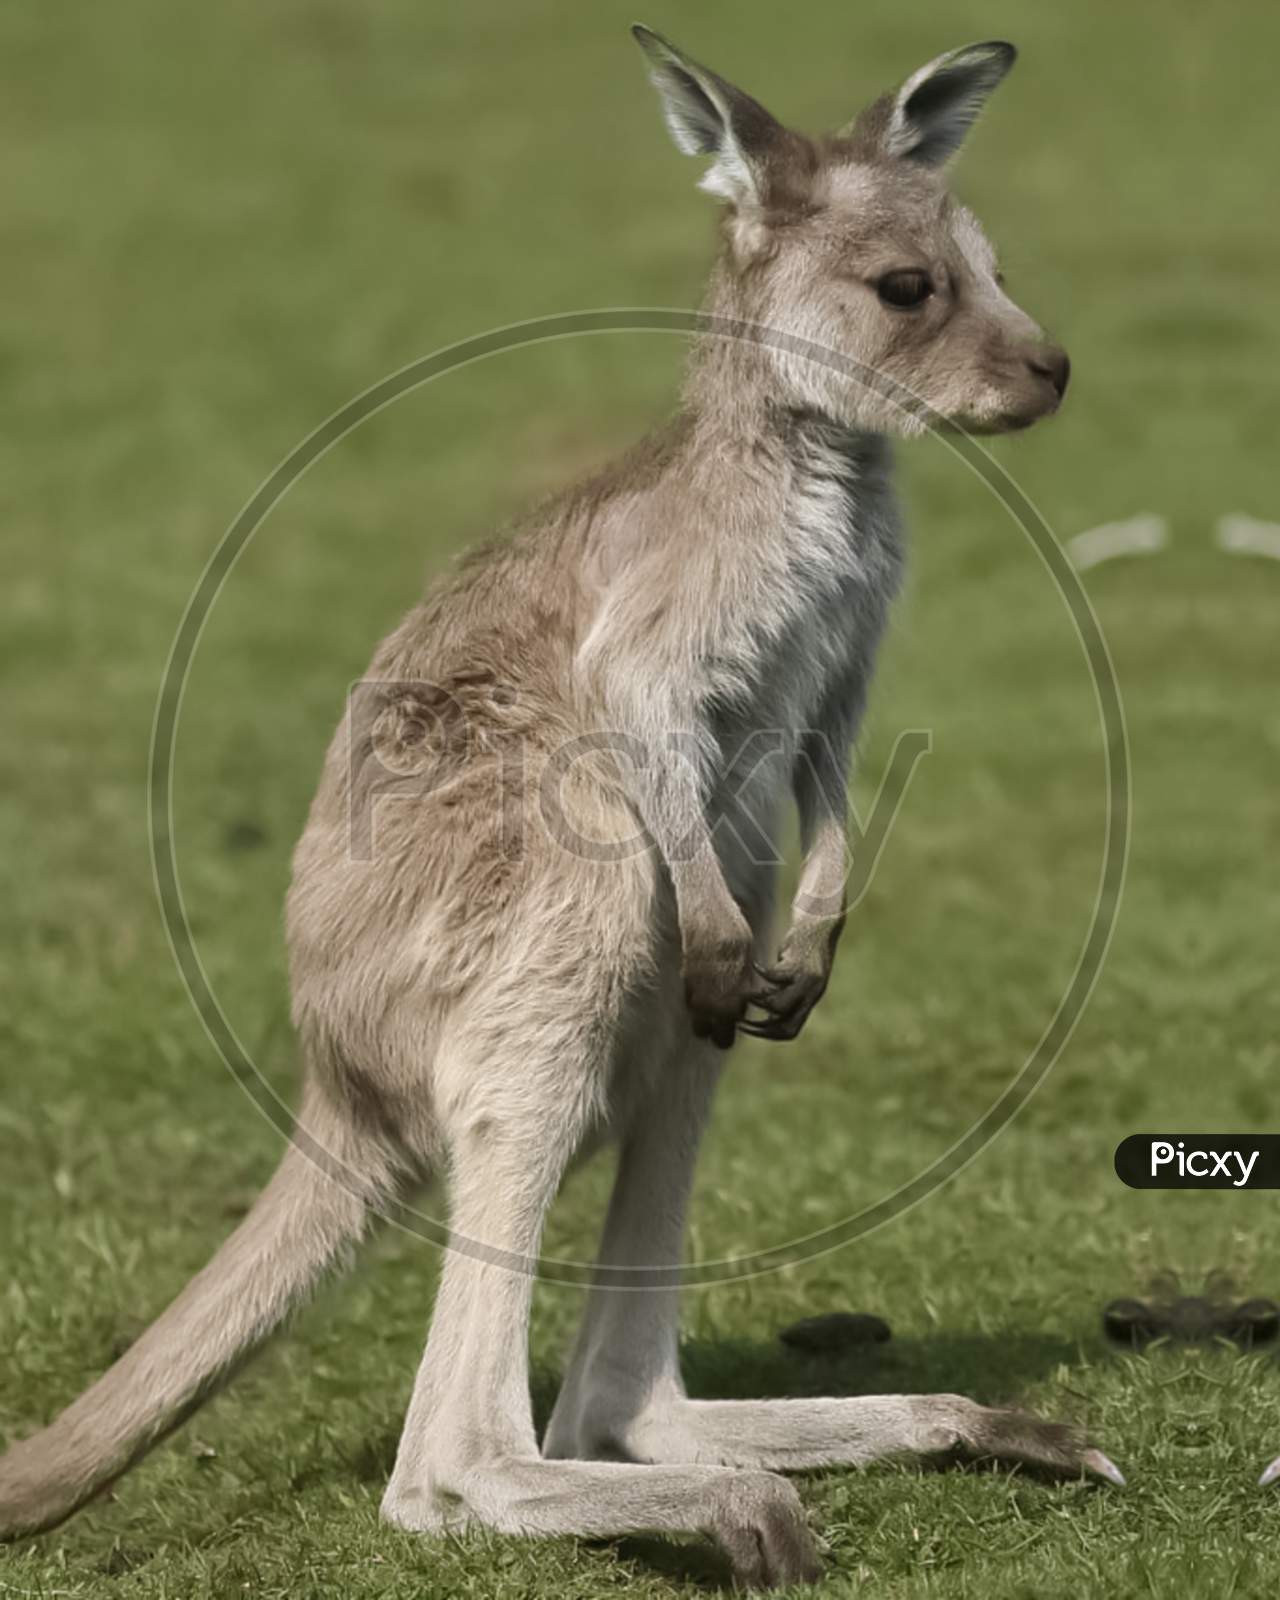 Parma Kangaroo photo